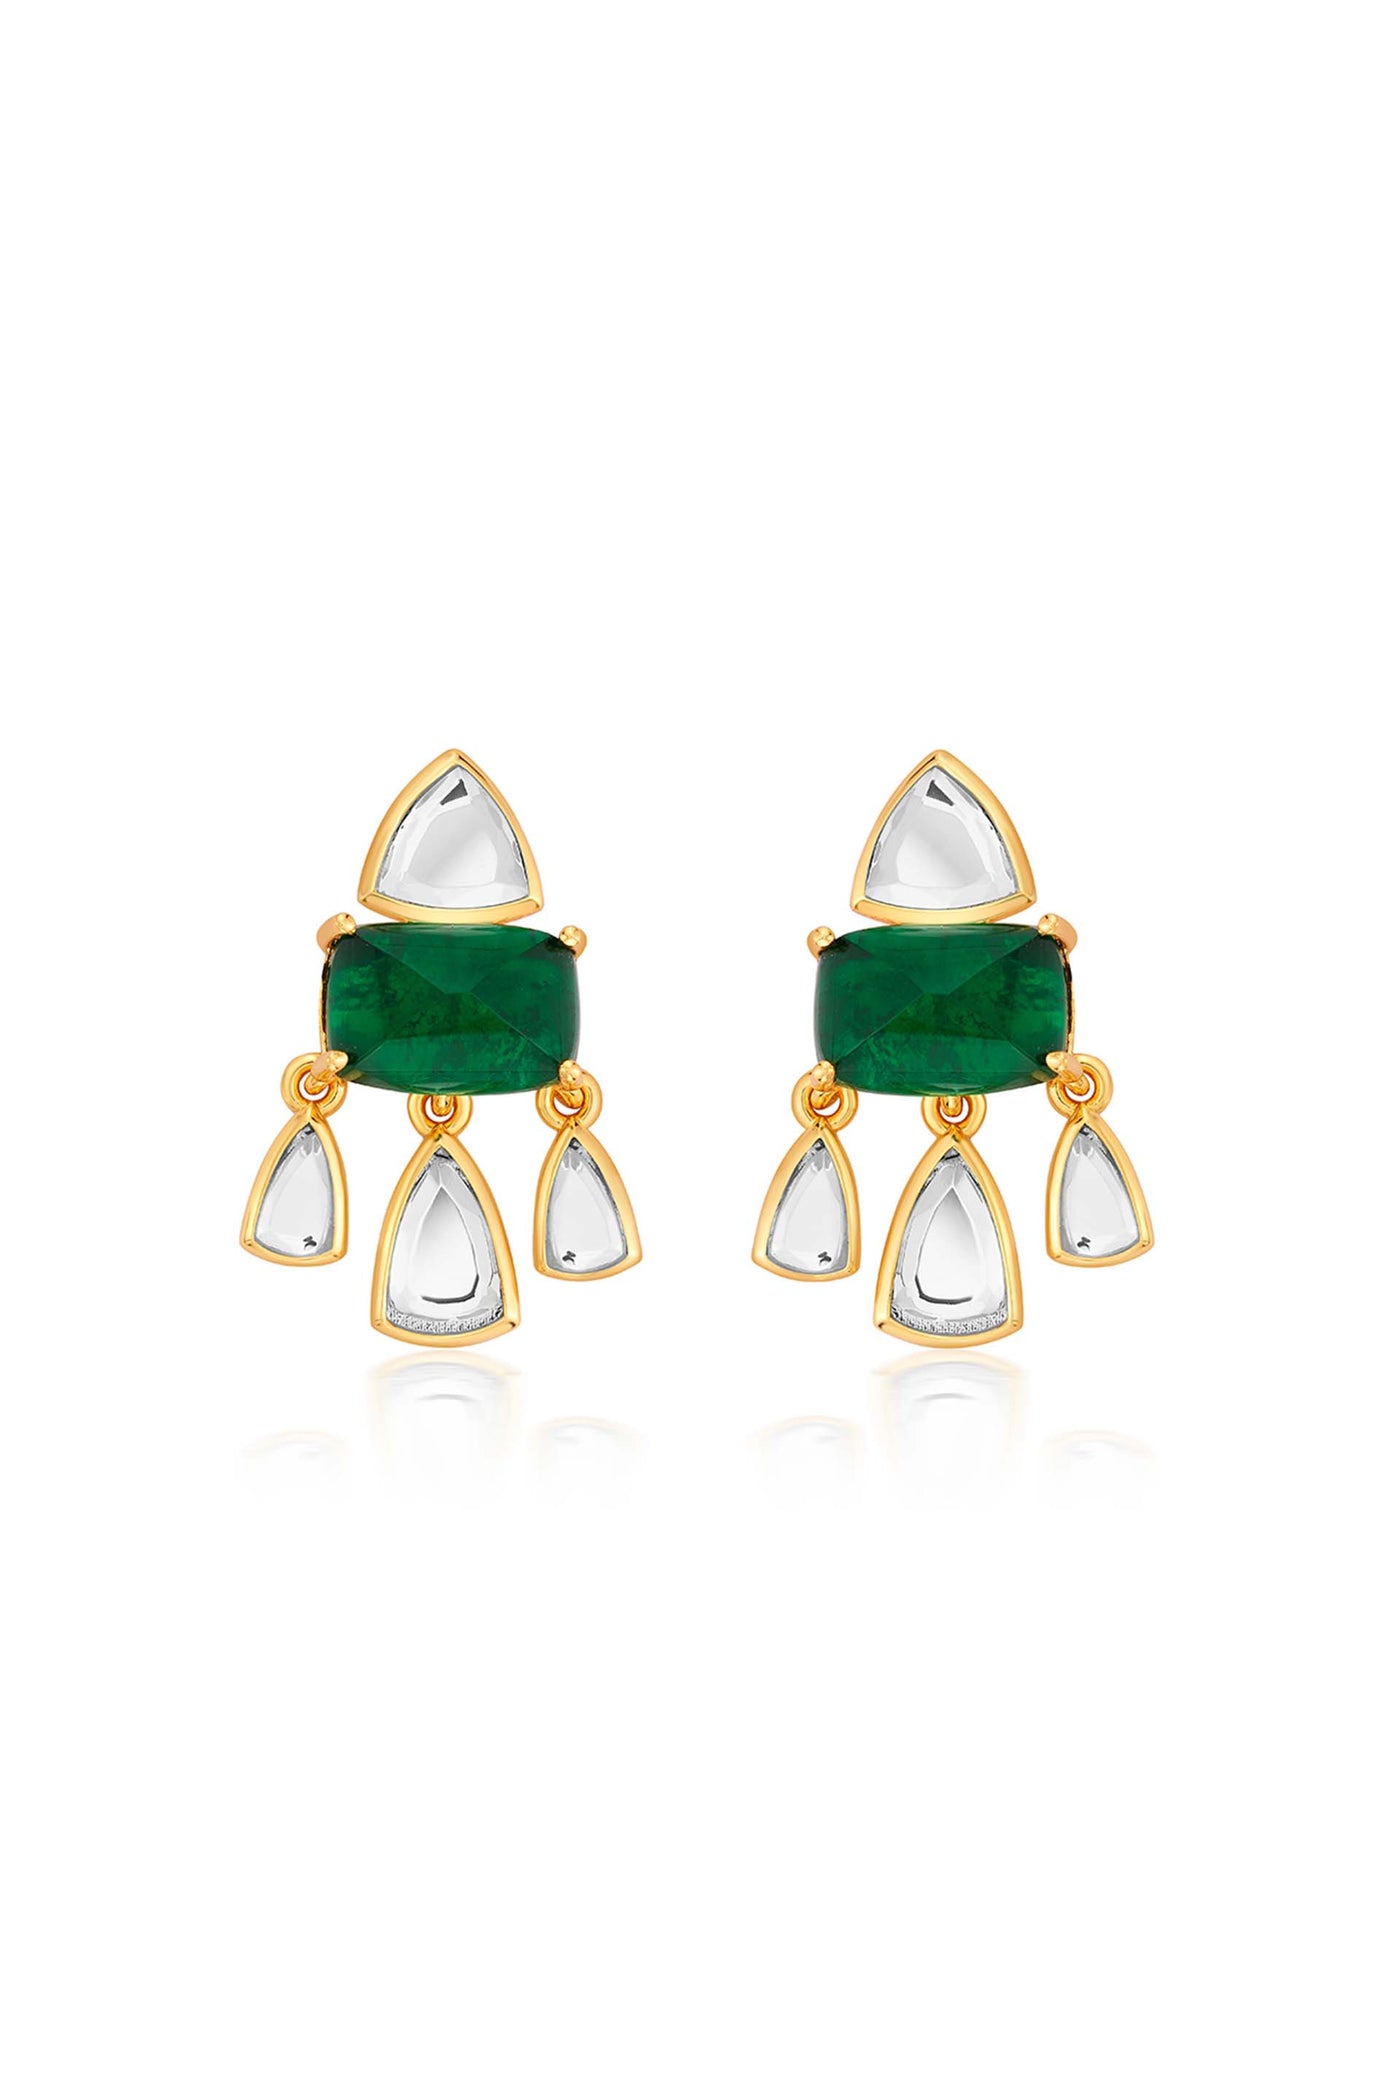 Isharya Shiza Mirror & Hydro Emerald Statement Studs green gold fashion jewellery online shopping melange singapore indian designer wear